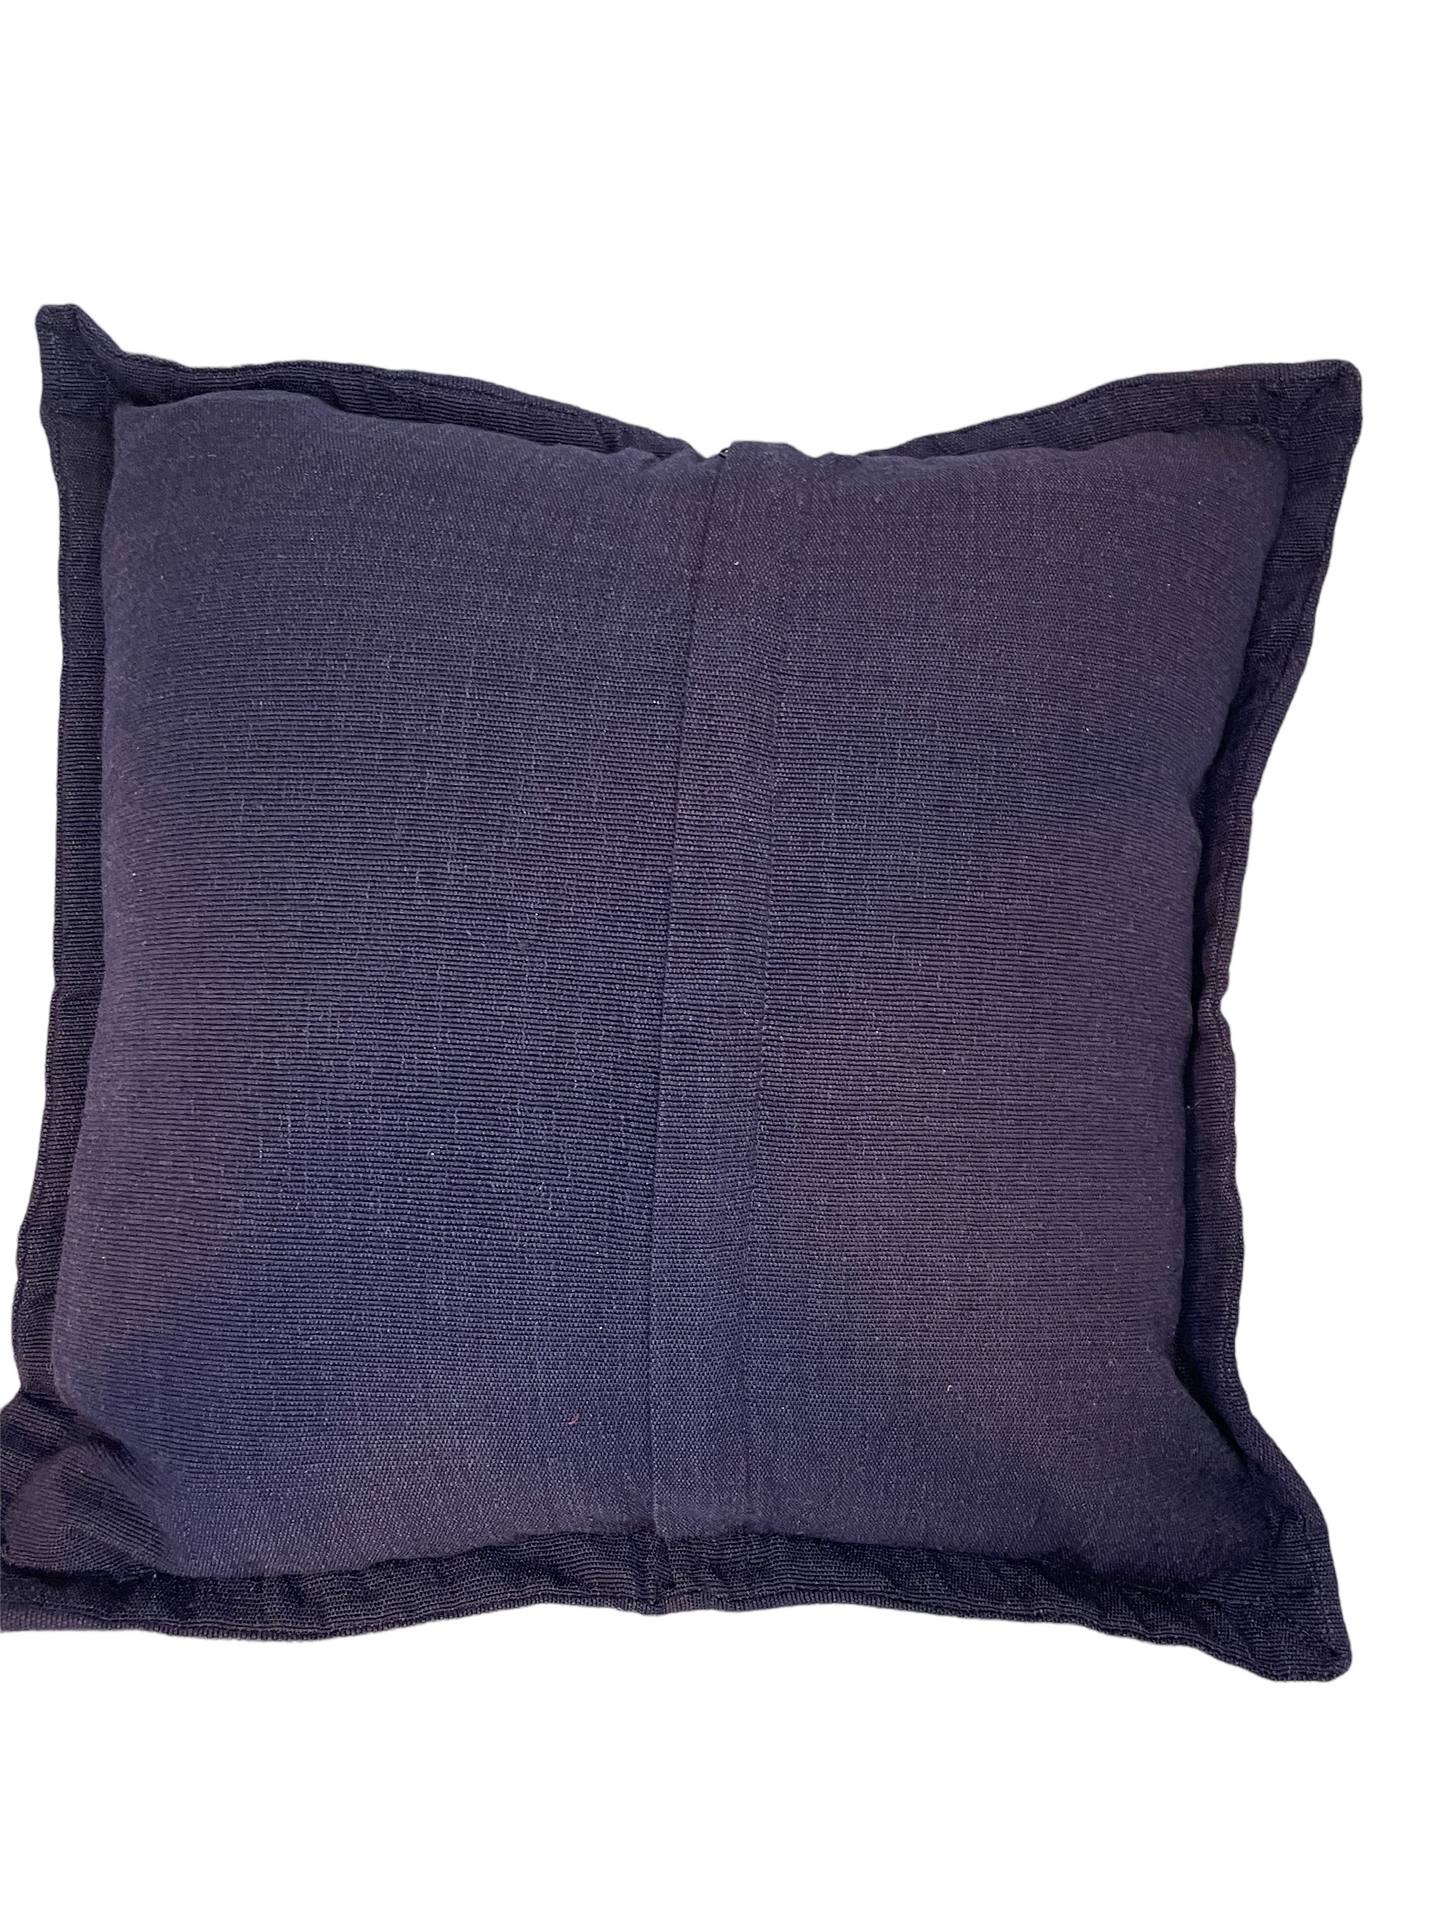 Navy Blue 18 x 18 Pillow Cover